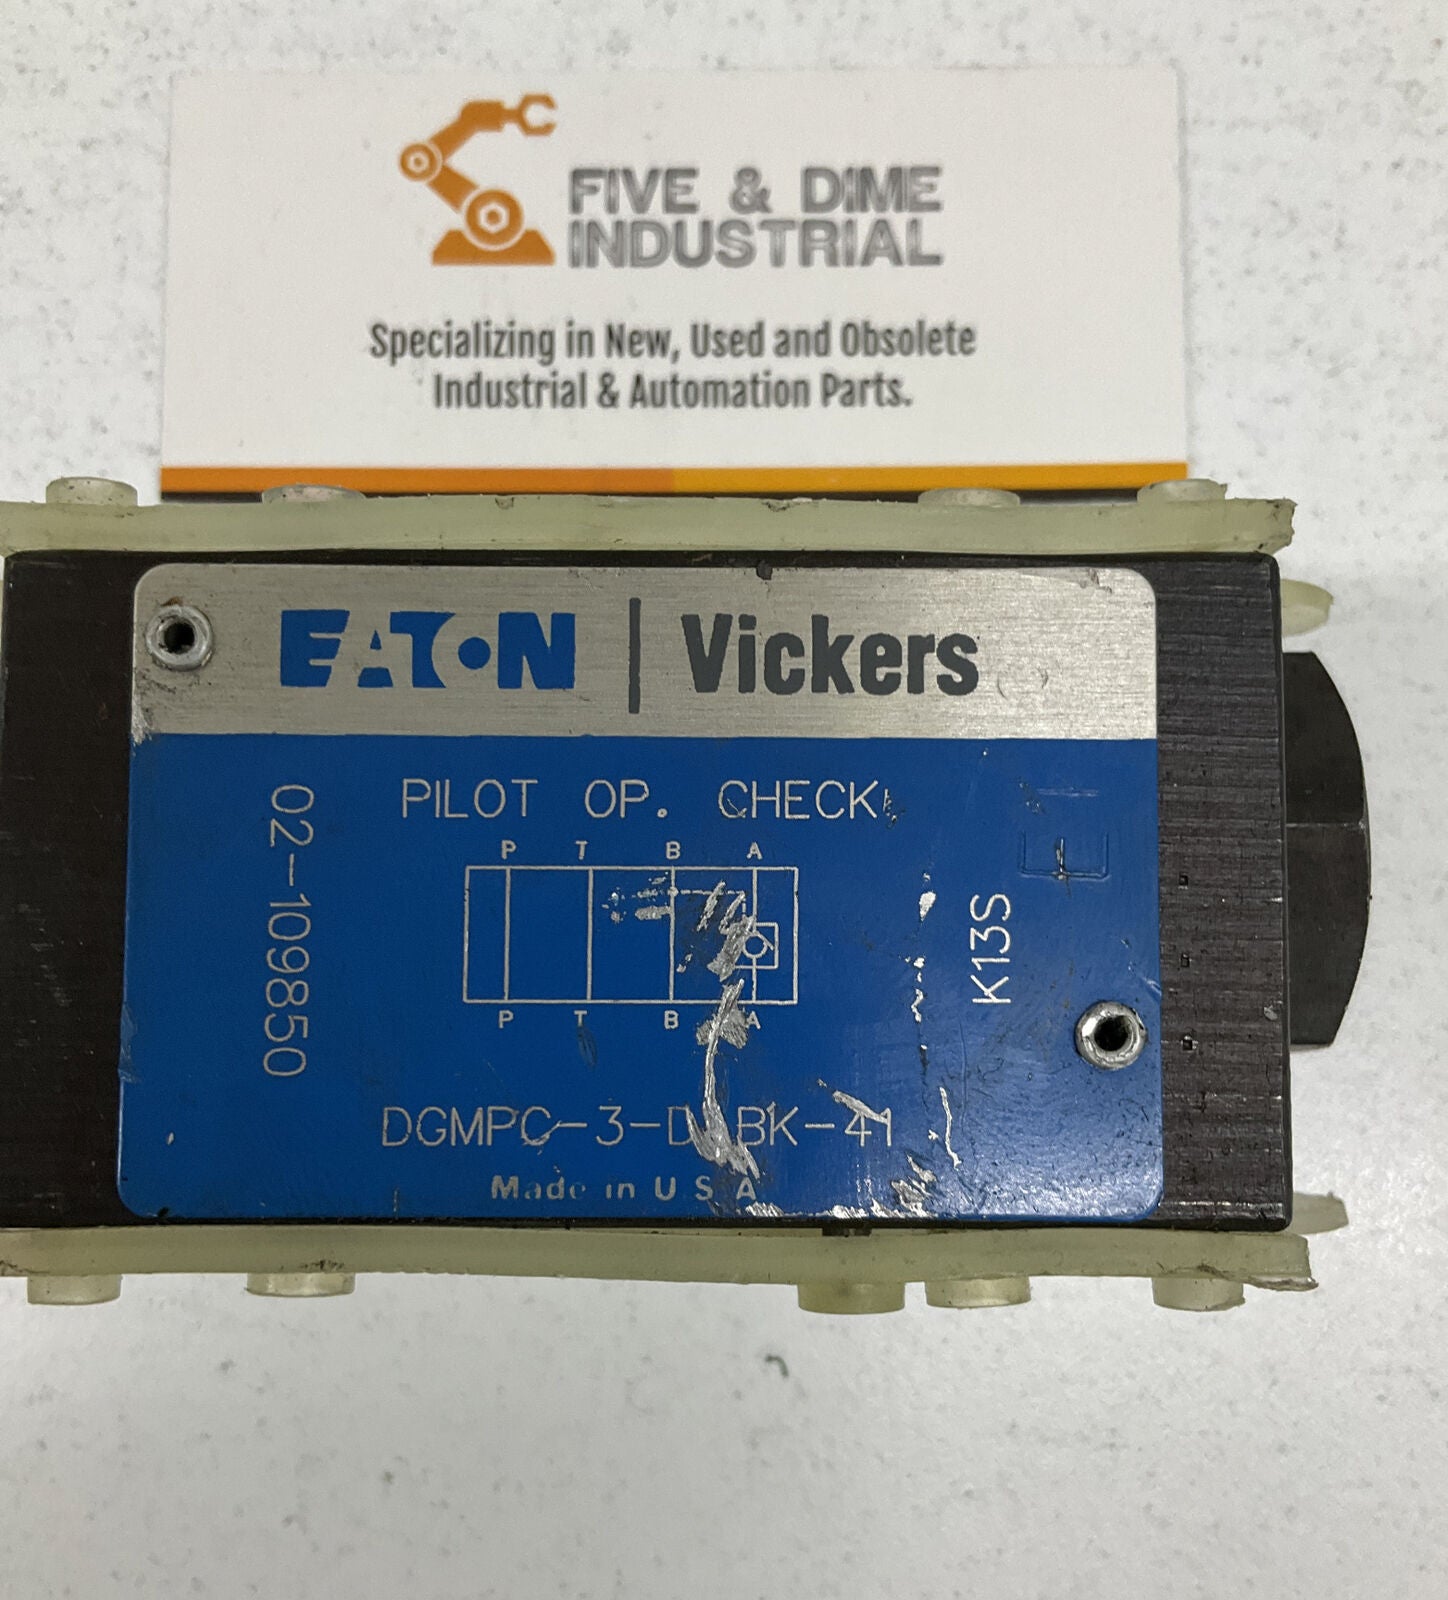 Eaton Vickers DGMPC-3-DABK-BAK-41 Pilot Check Valve 02-109850  (BL186) - 0